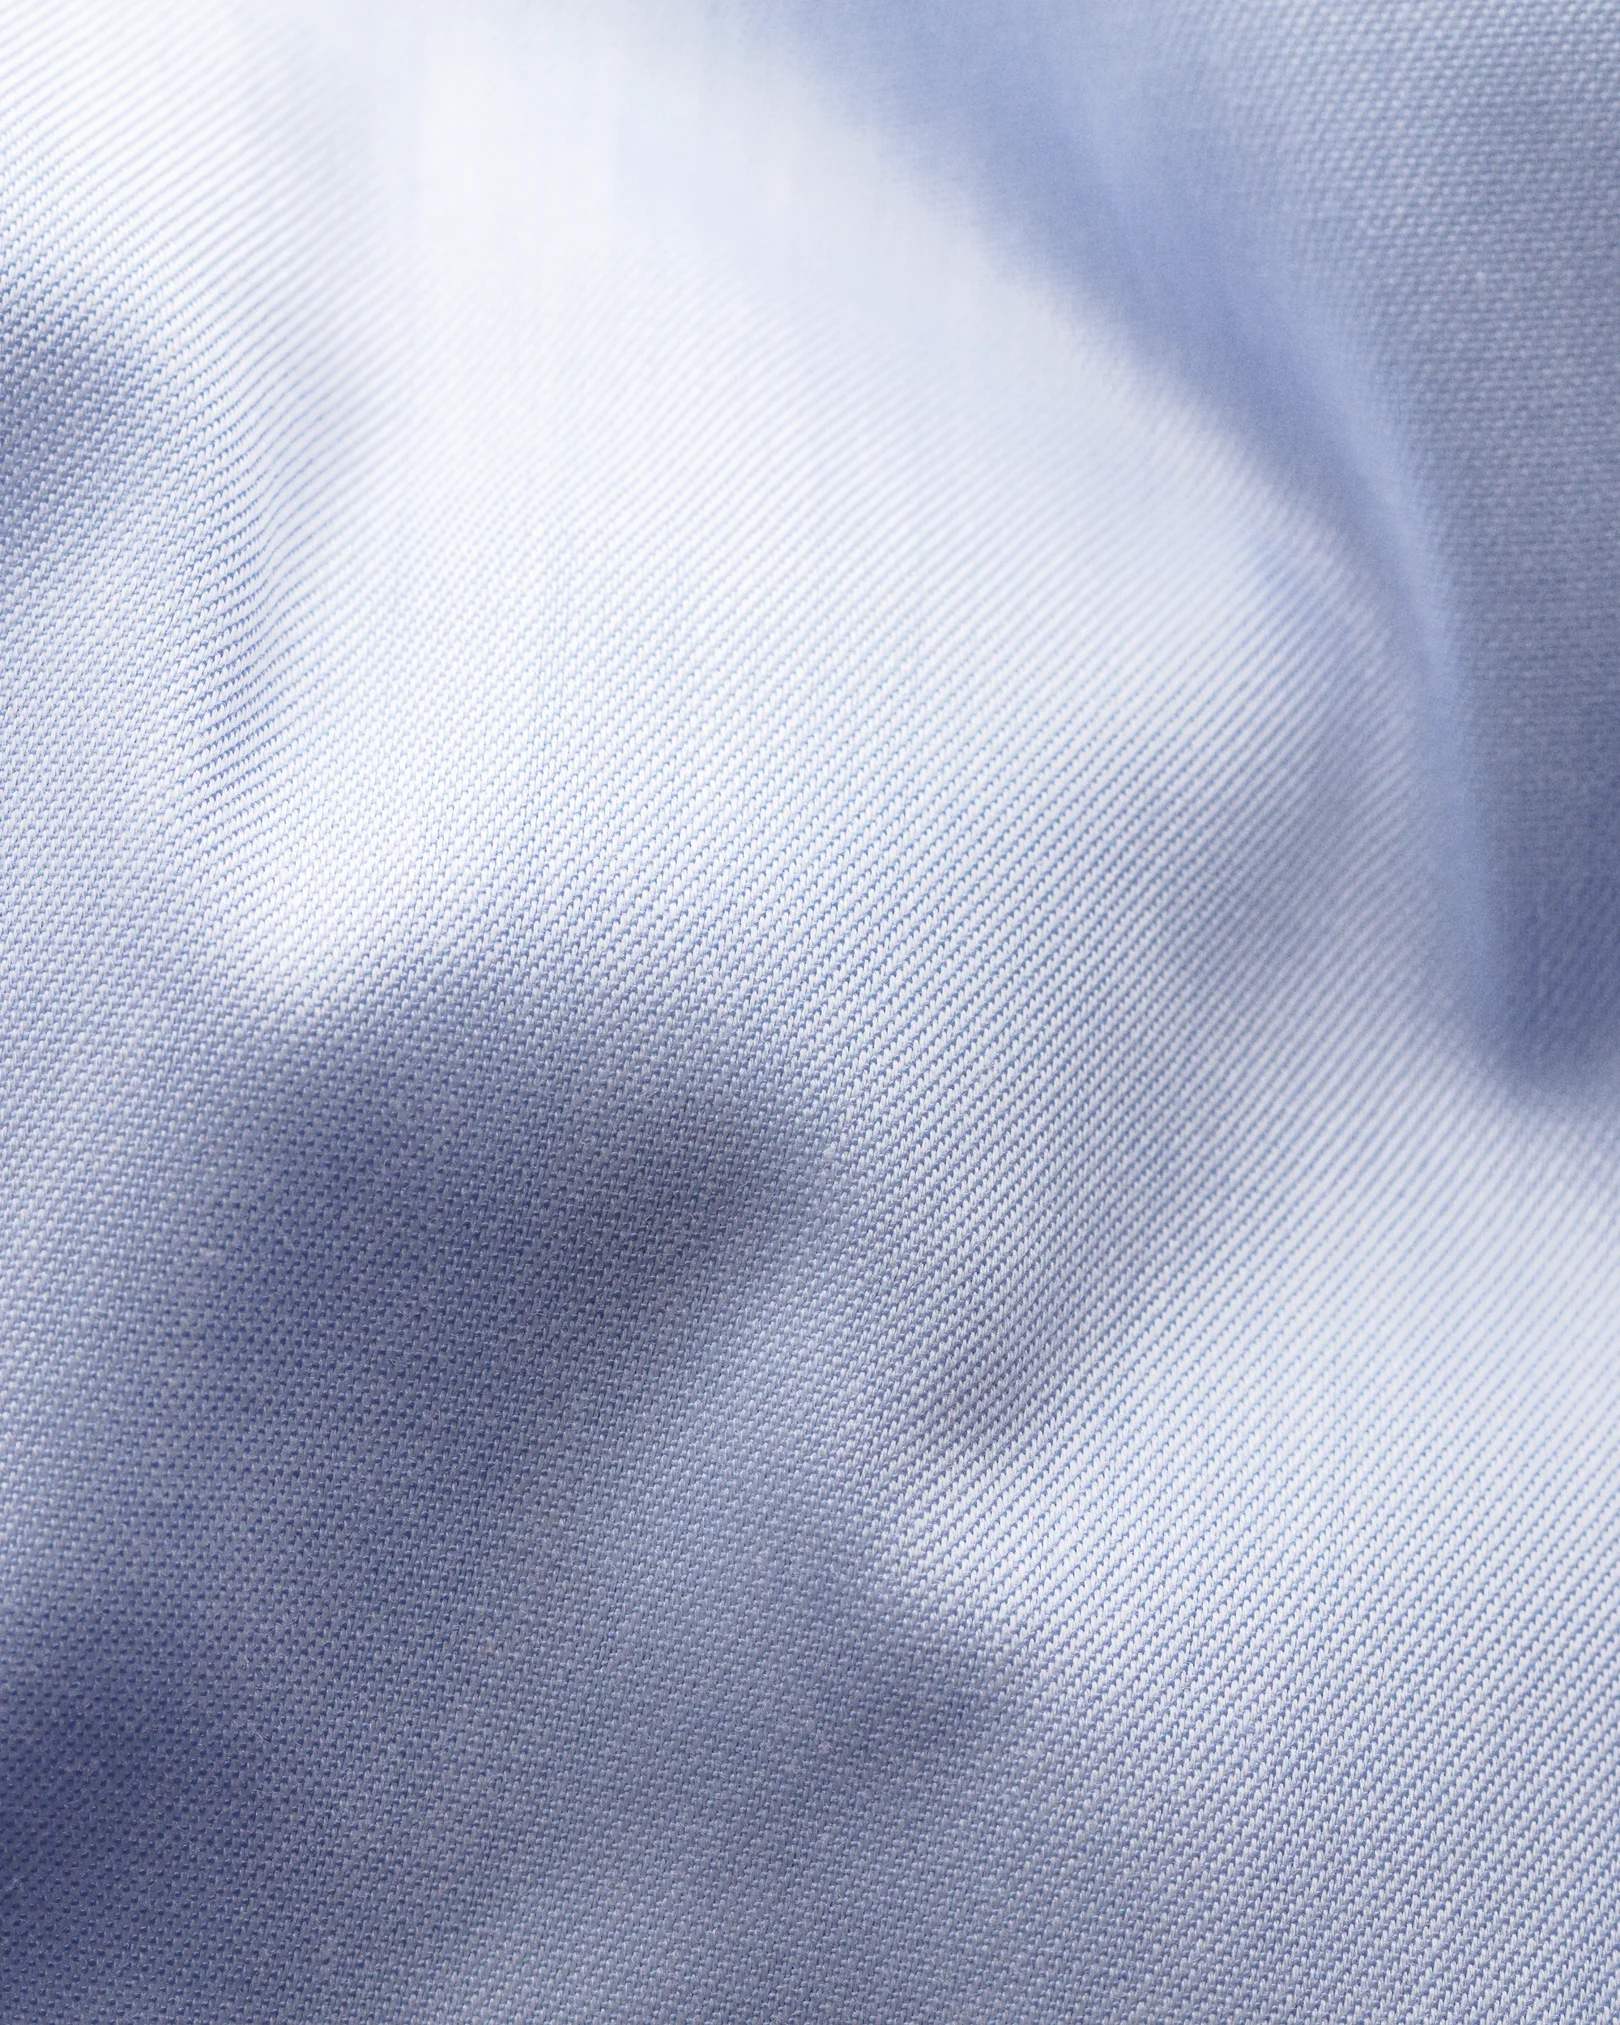 Eton - light blue twill shirt printed details